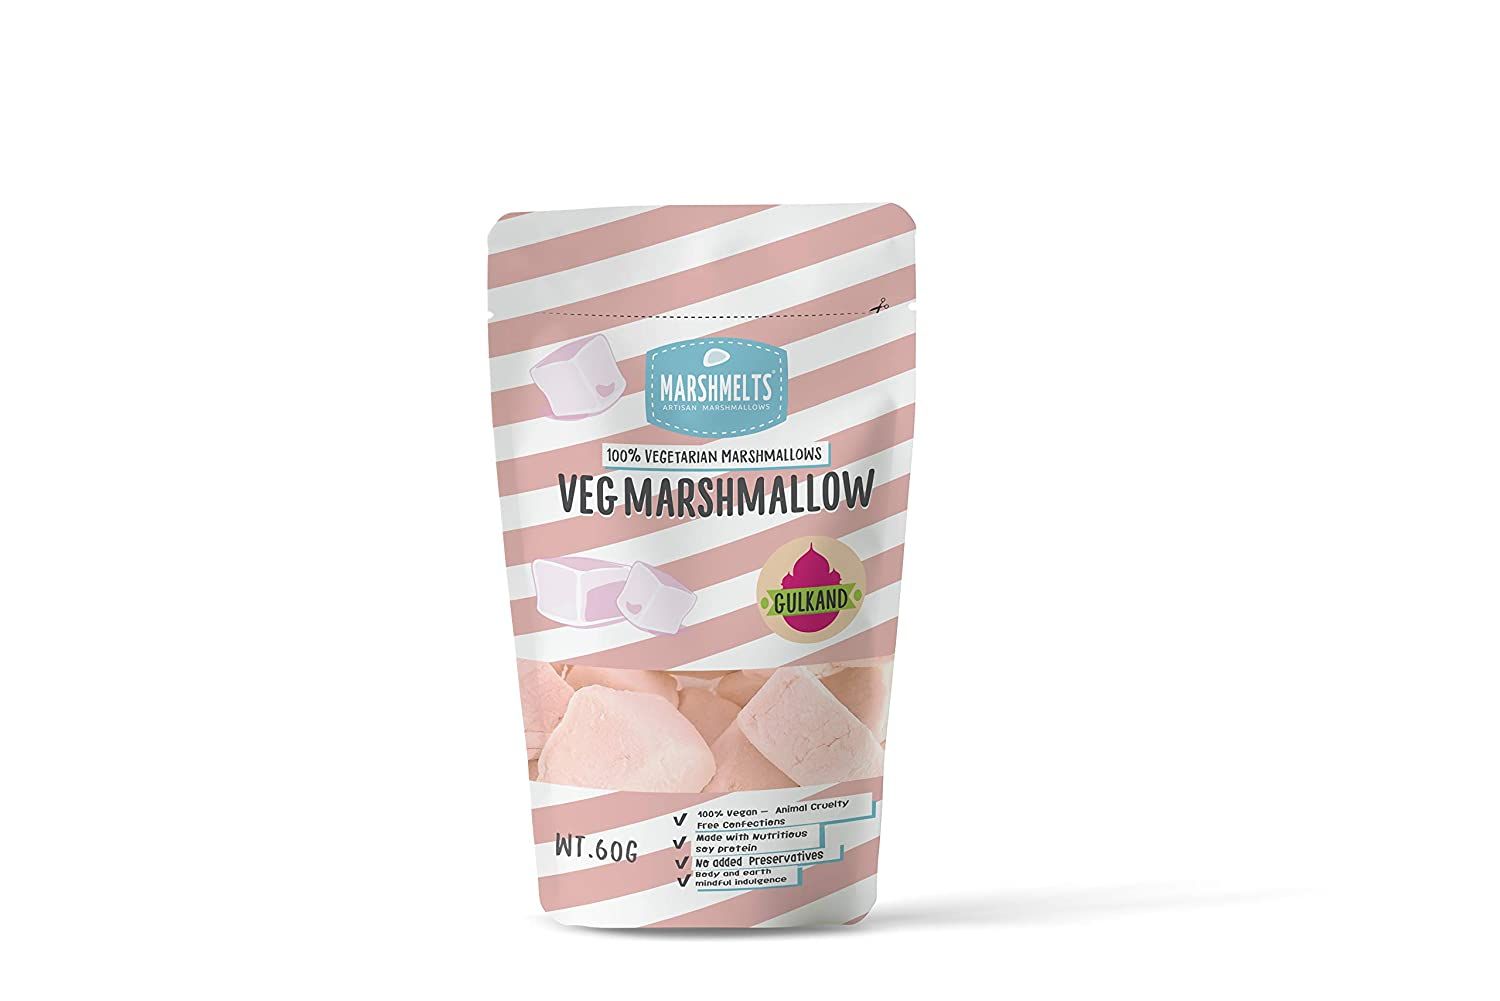 Marshmelts Veg Marshmallow Gulkand Flavour Image